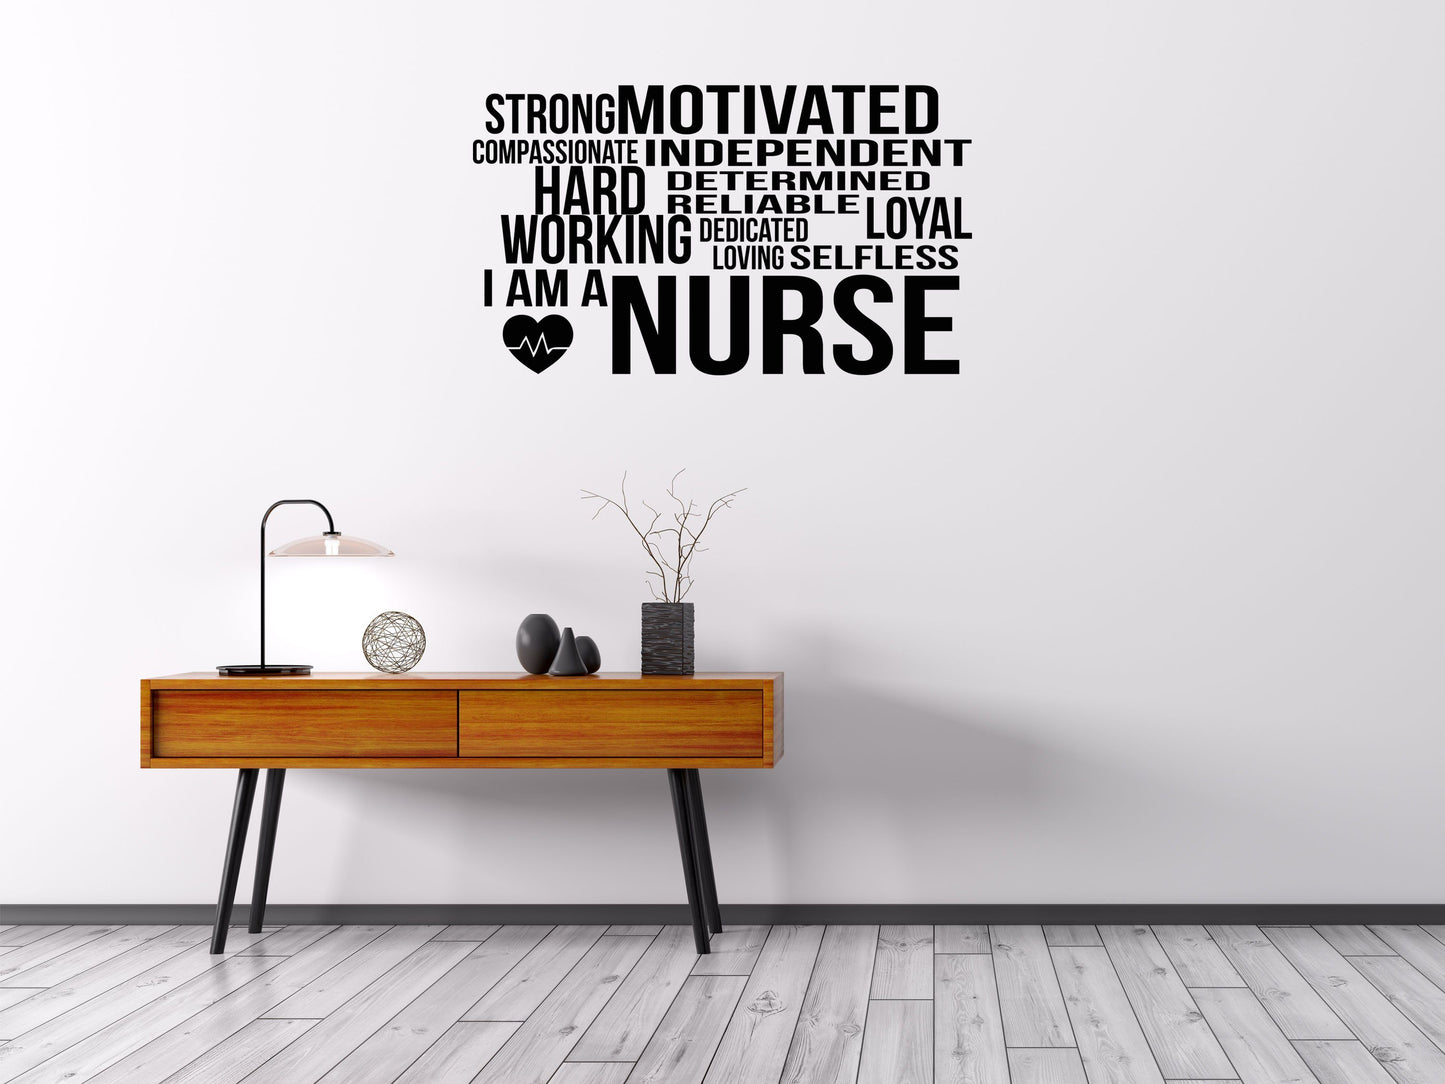 I Am A Nurse - Inspirational Wall Decals Vinyl Wall Decal Inspirational Wall Signs 